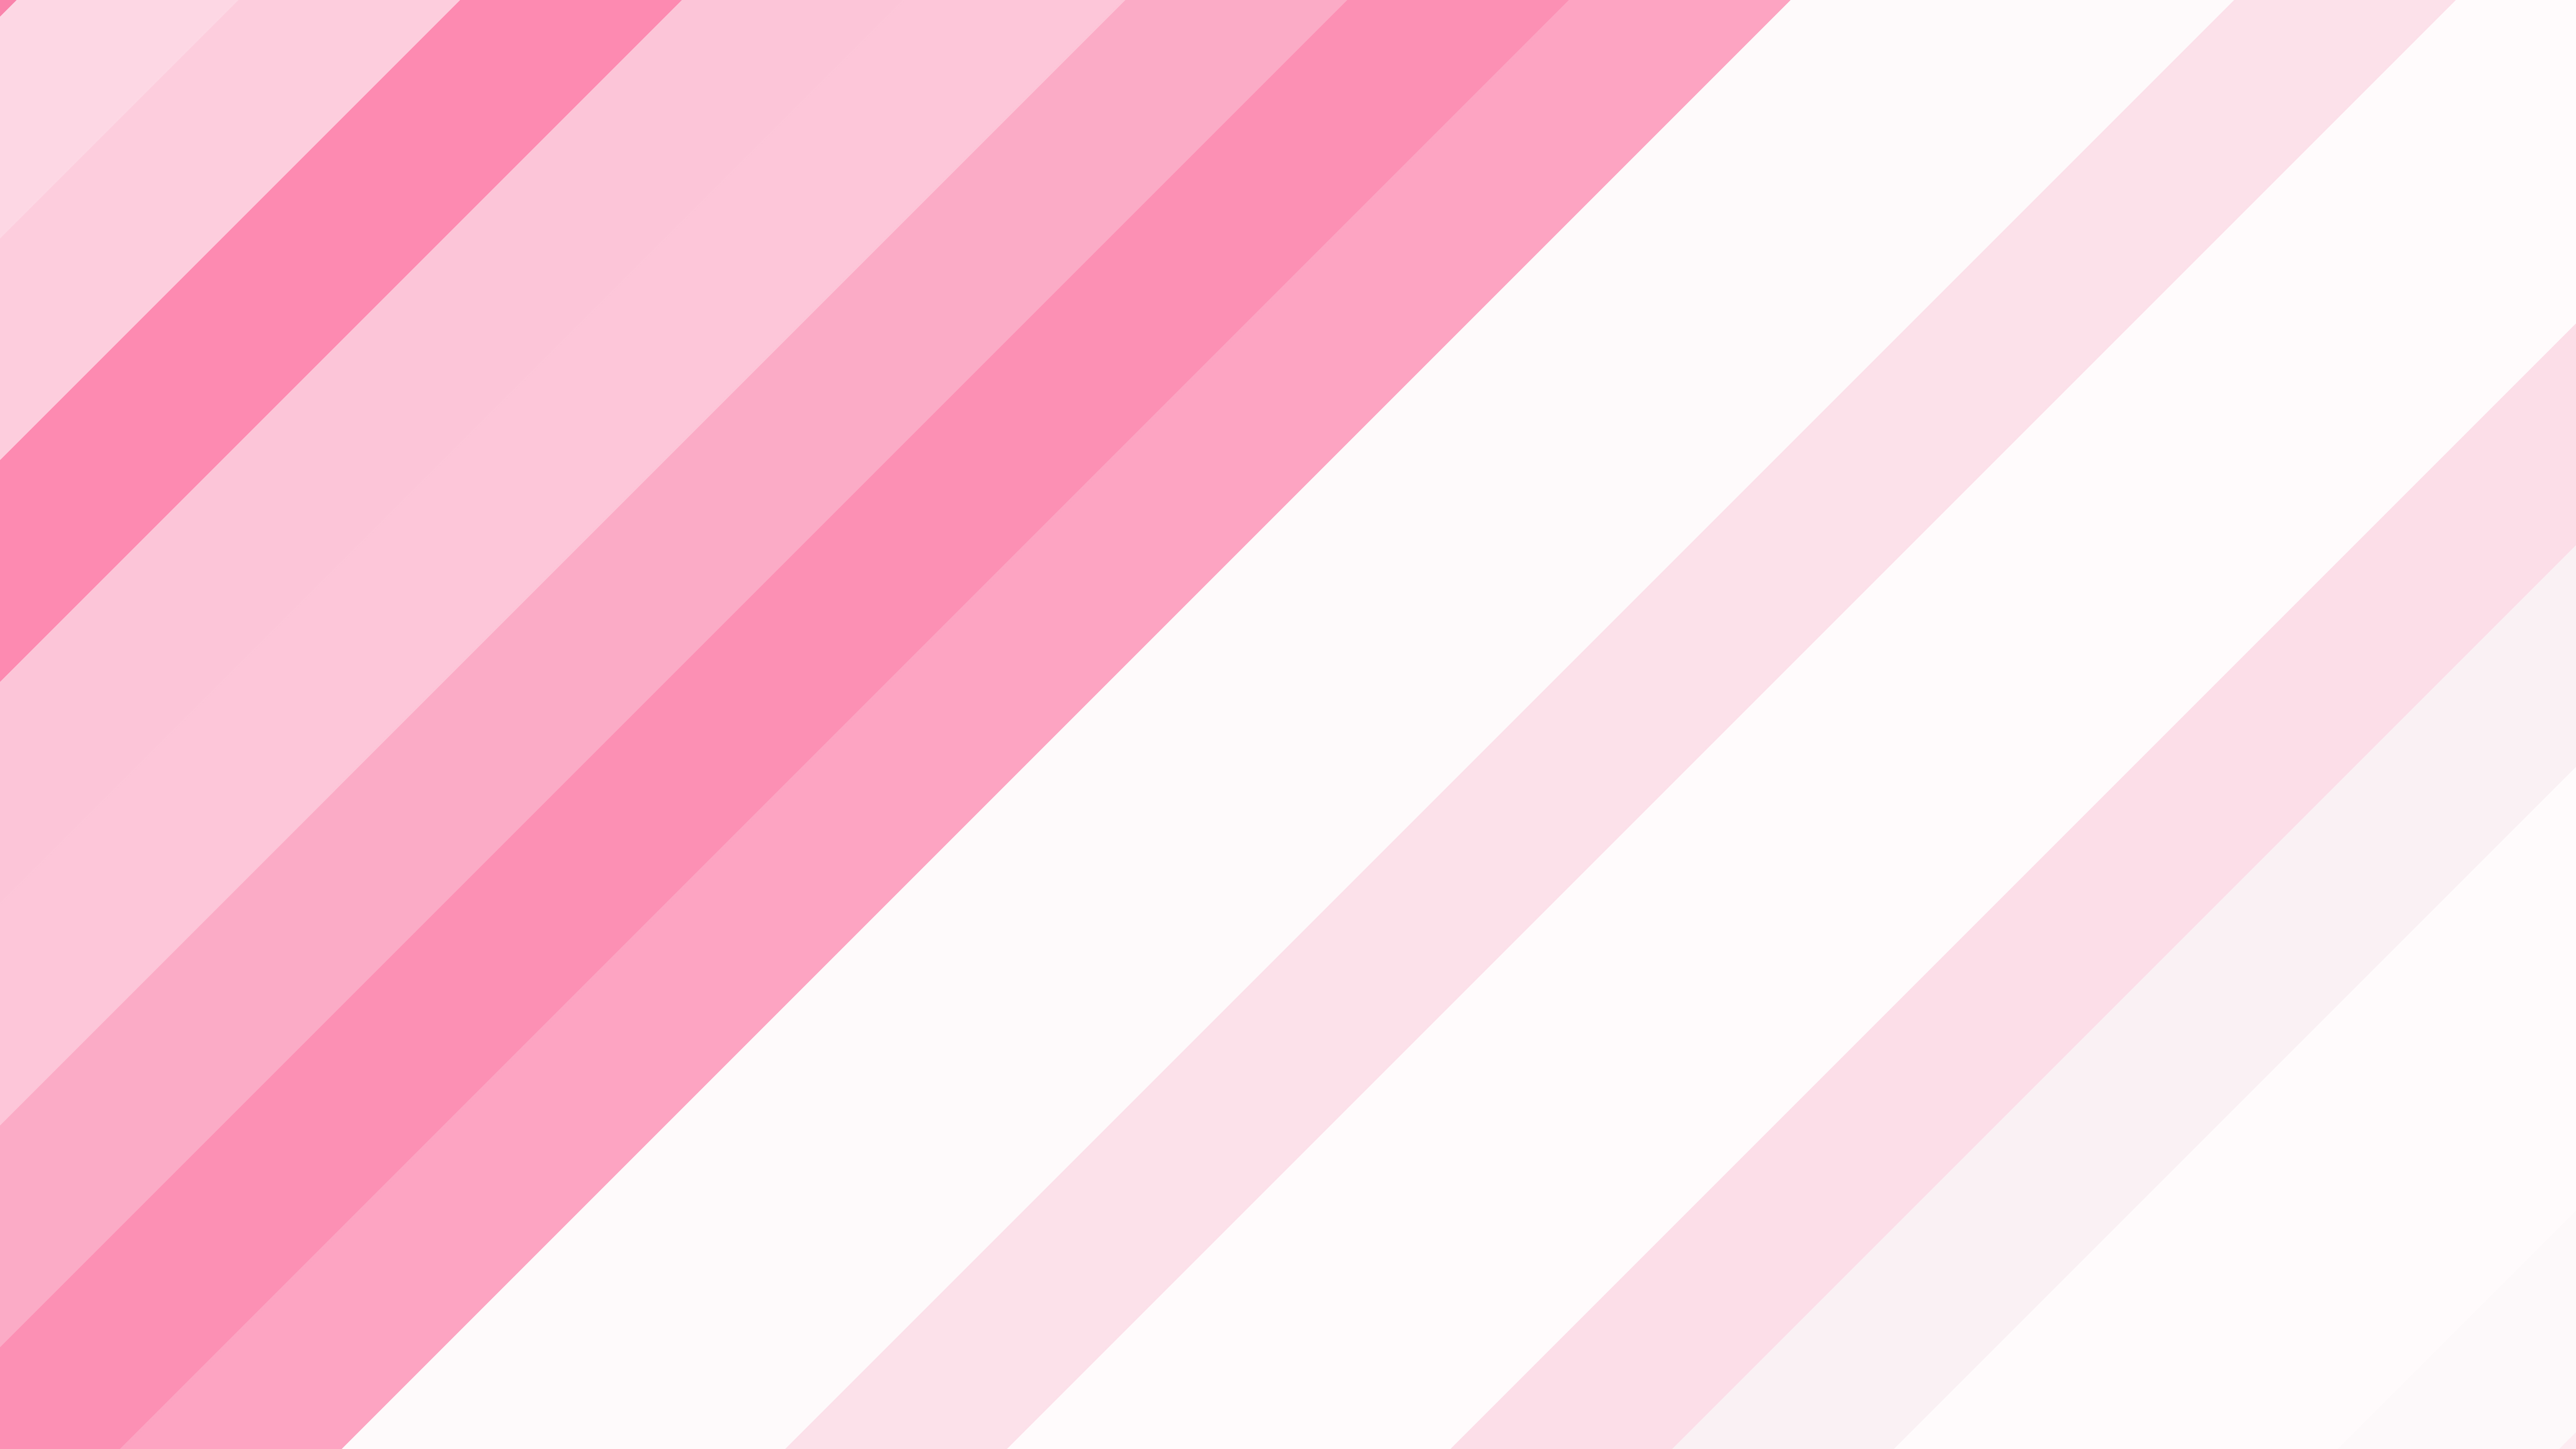 Free Pink and White Diagonal Stripes Background Design